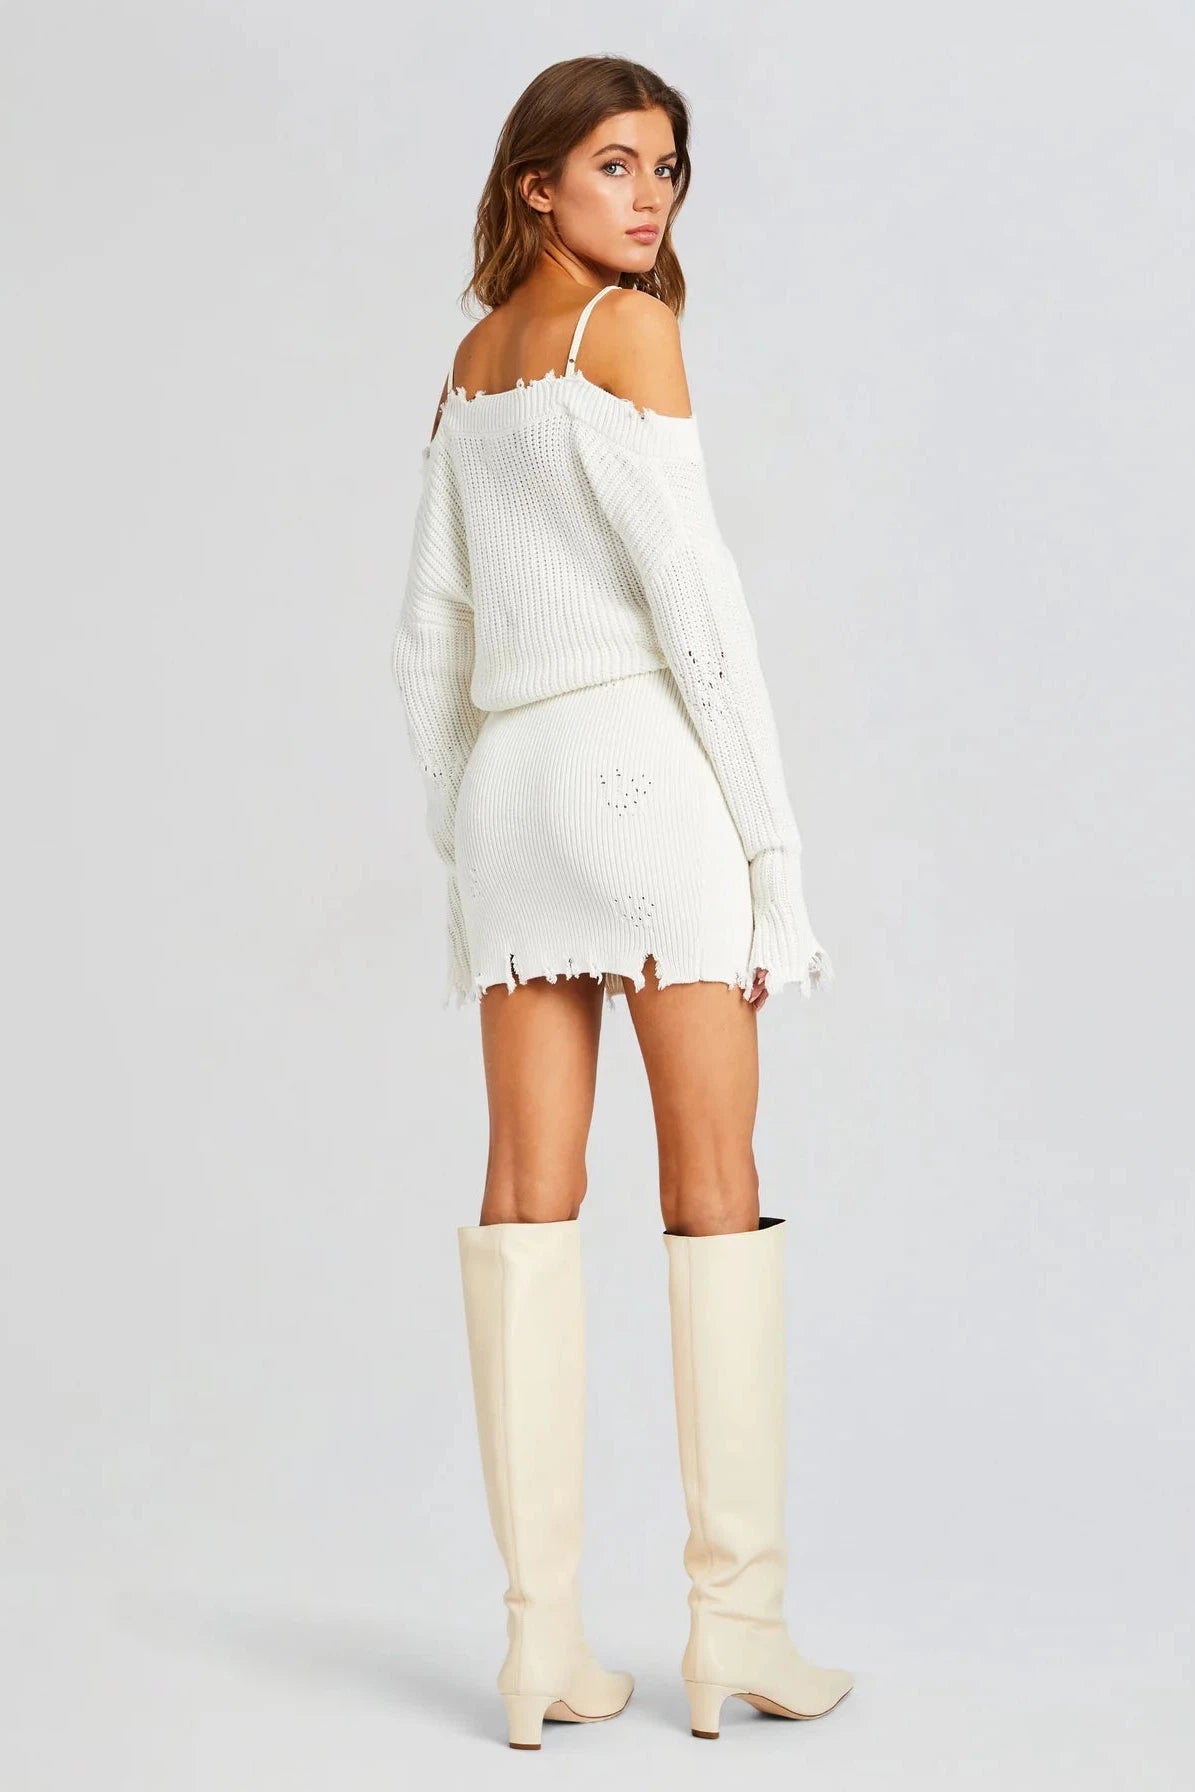 SEROYA MAUDE DRESS IN WINTER WHITE